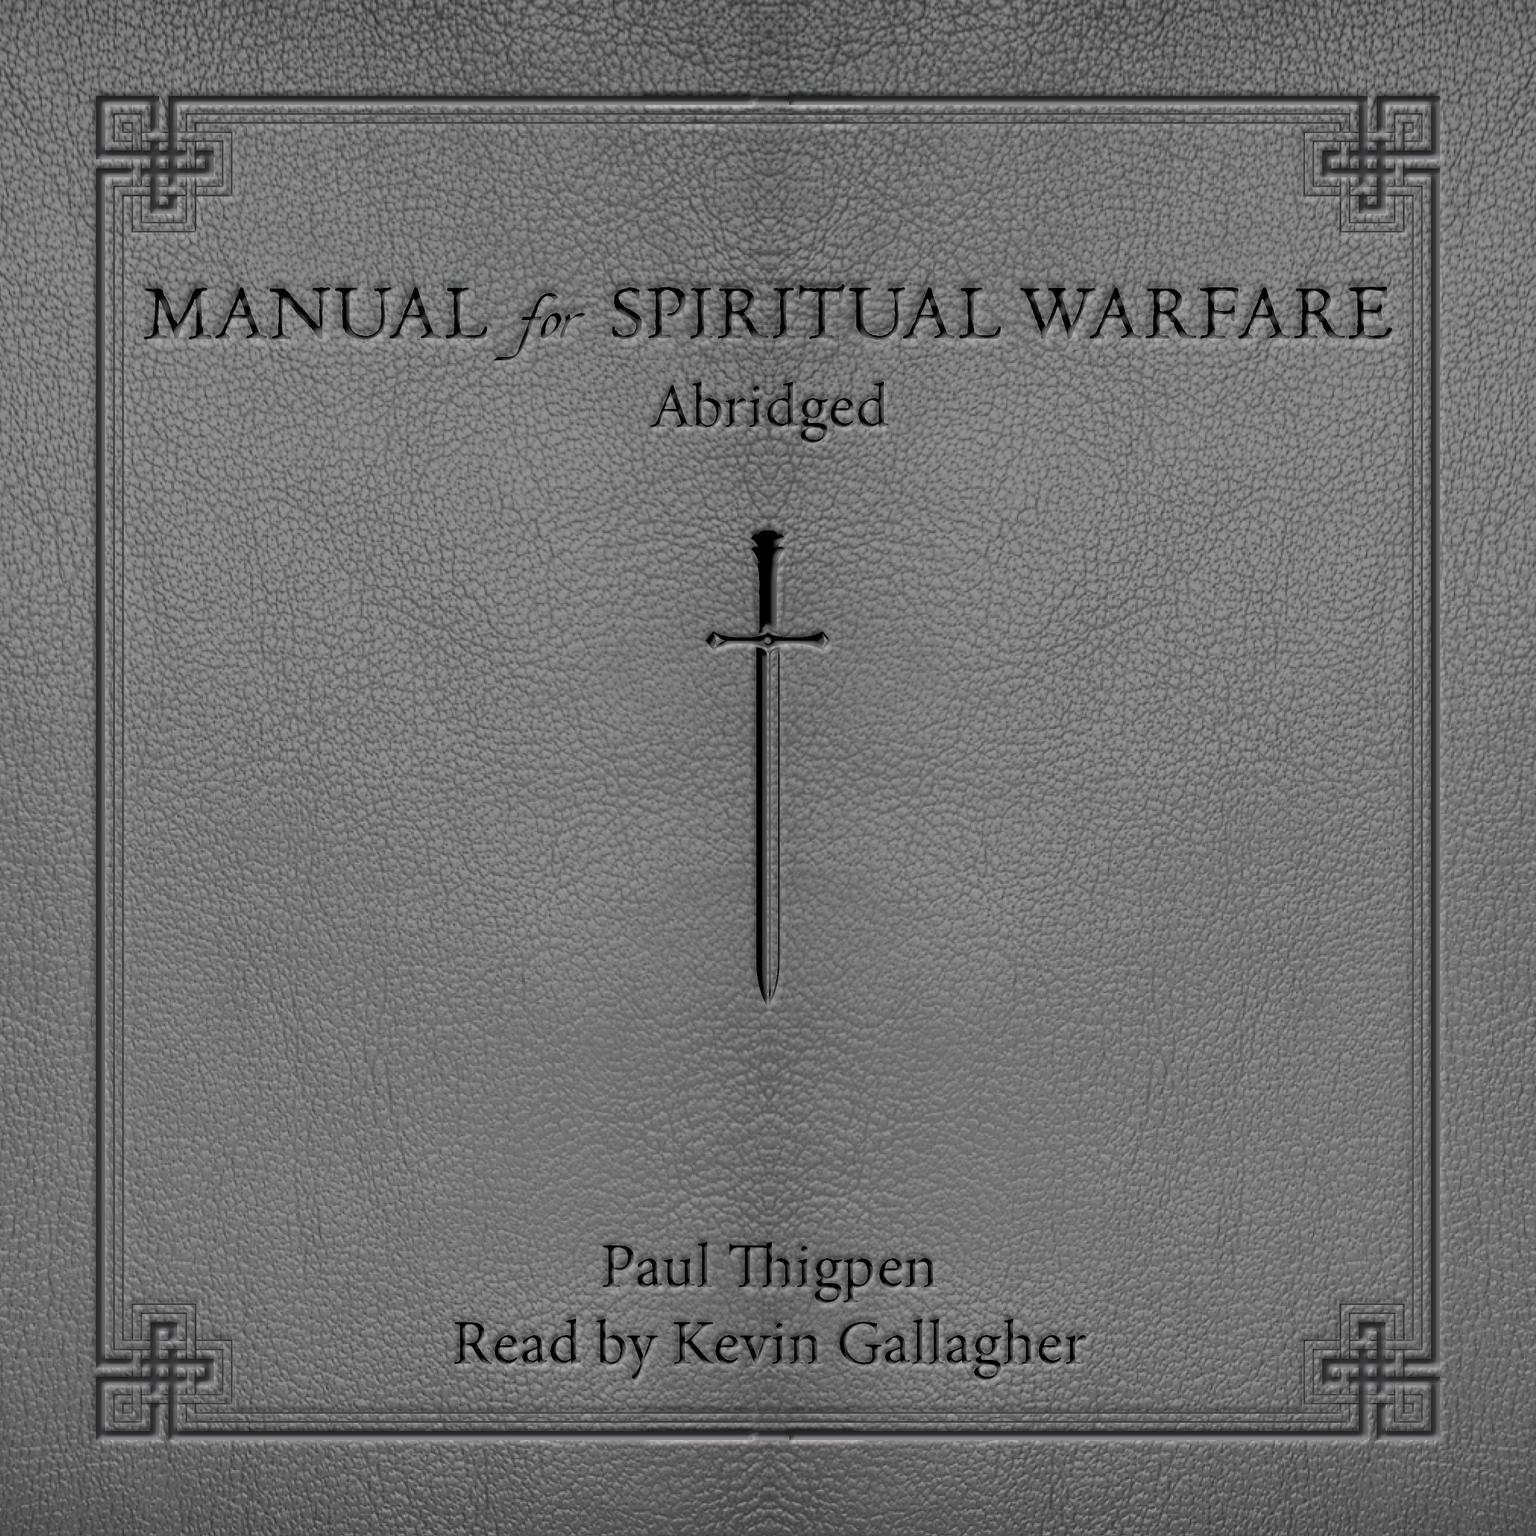 Manual for Spiritual Warfare (Abridged) Audiobook, by Paul Thigpen